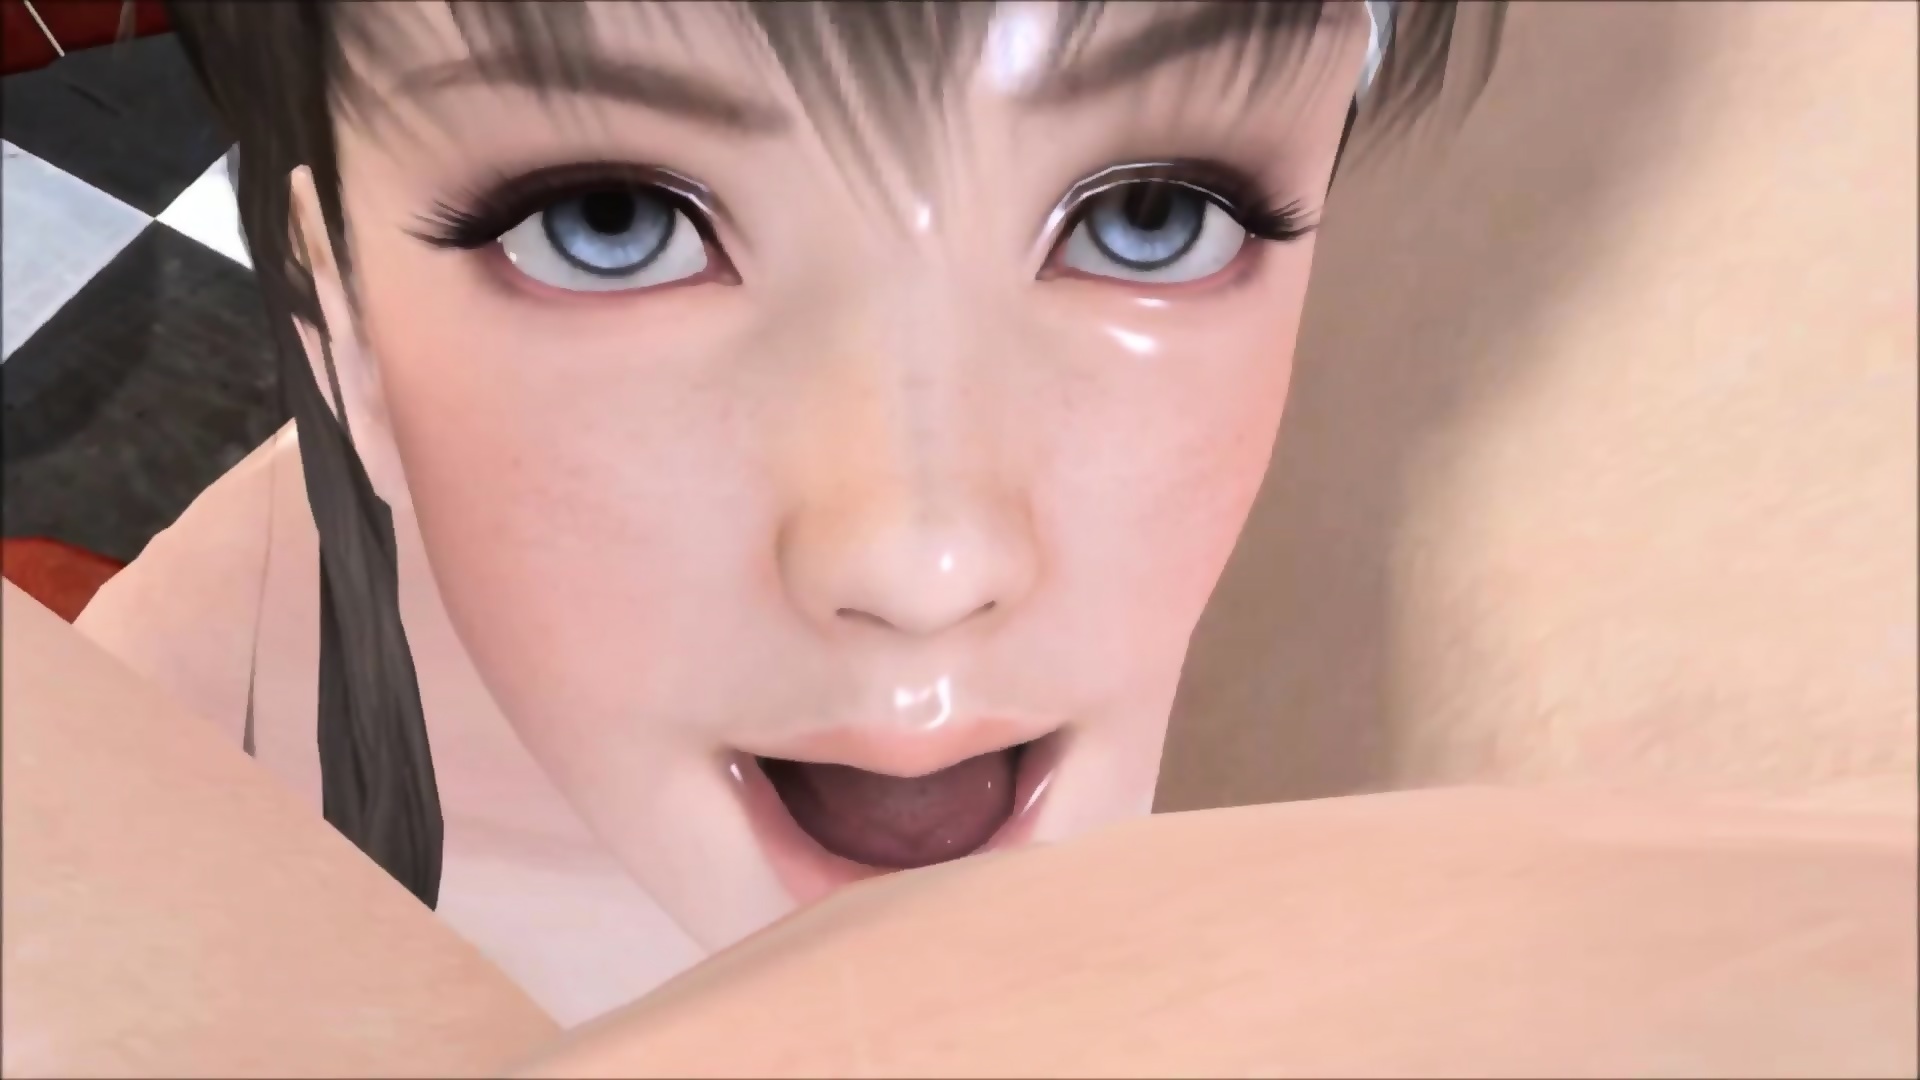 Iruingirls - Porn Game 3D Animated Hentai Compilation - IRuinGirls - EPORNER